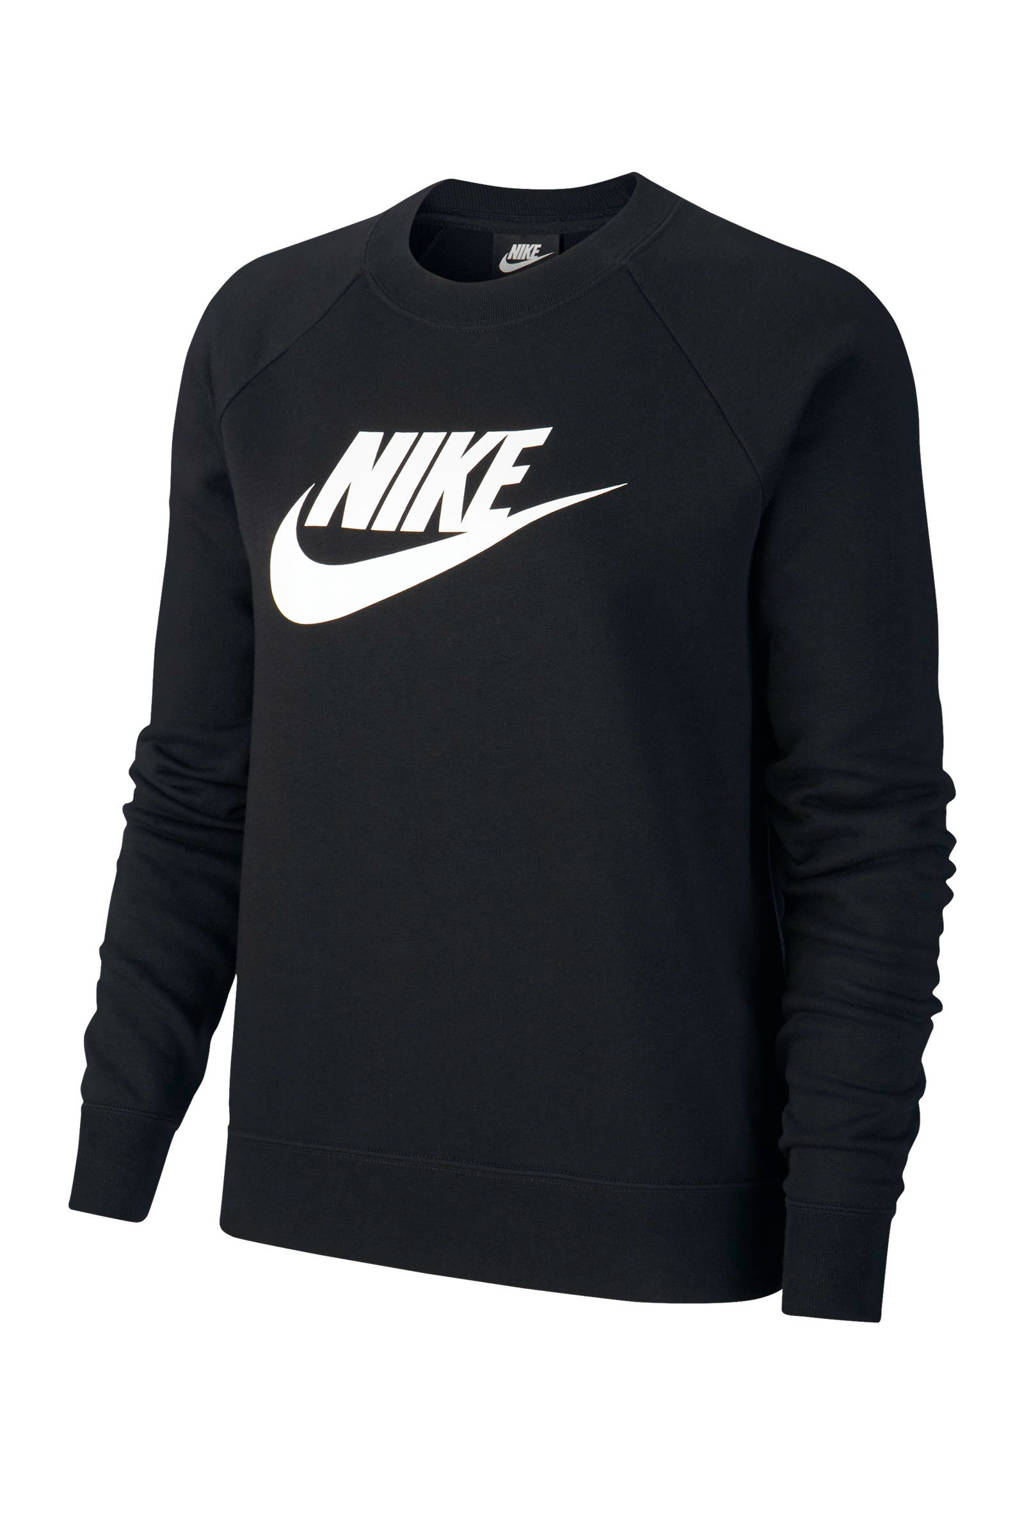 Nike sweater zwart, Zwart/wit